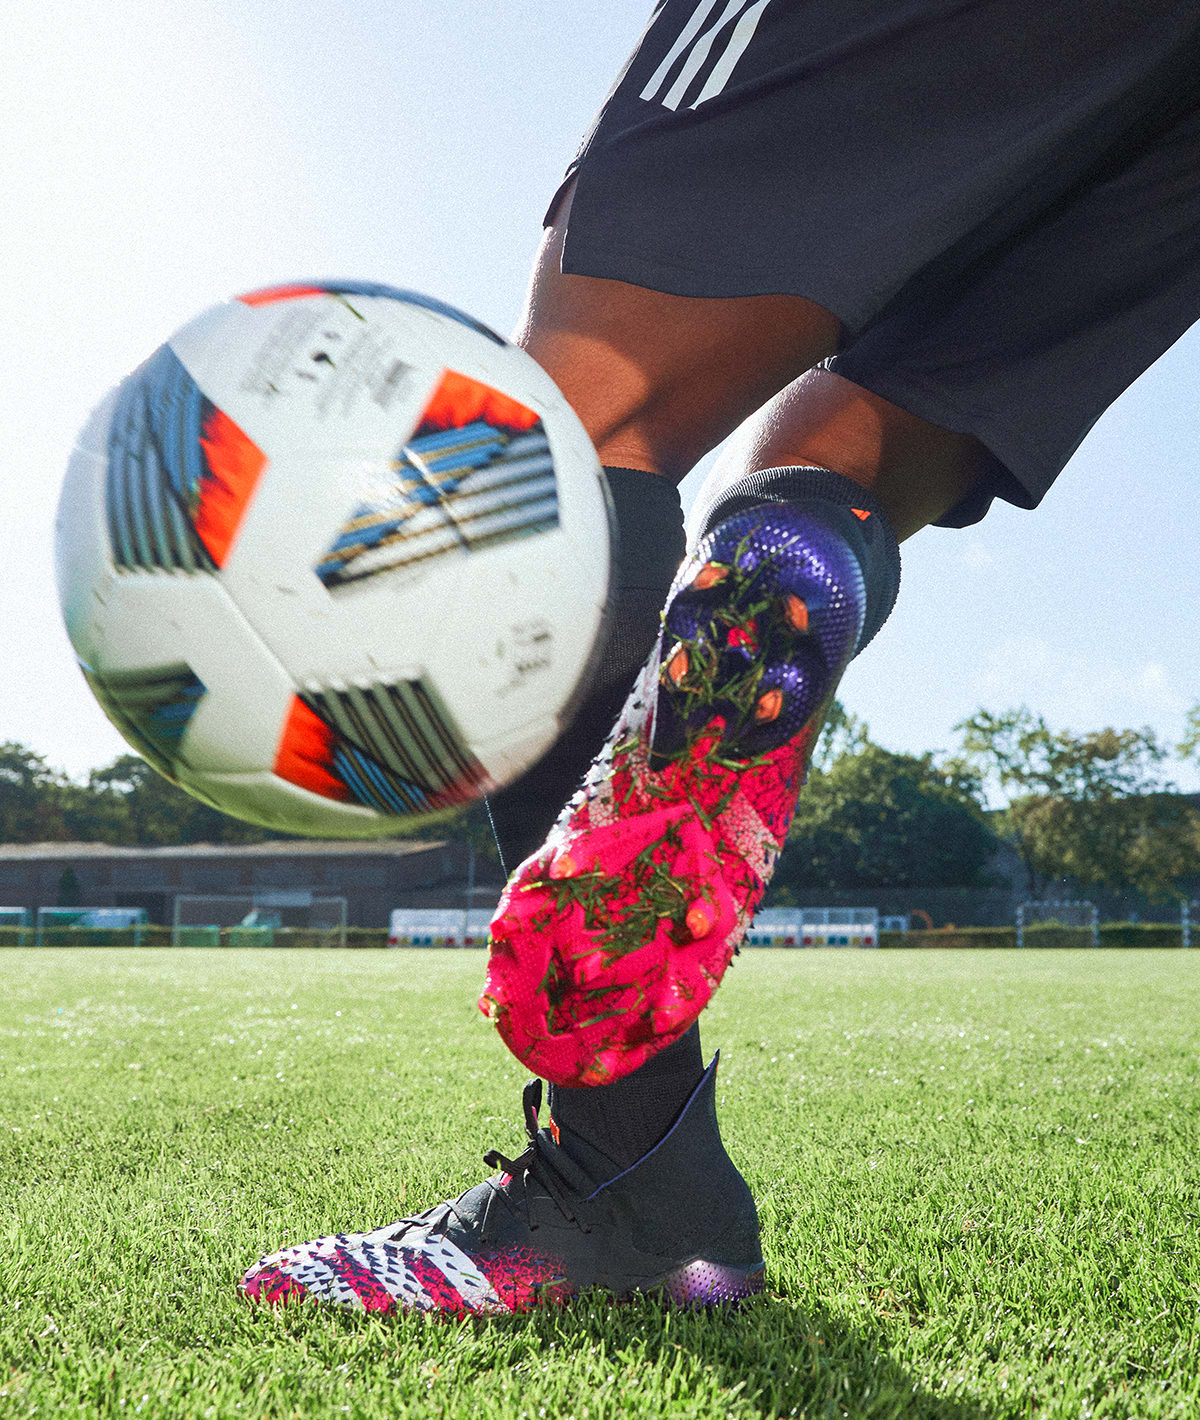 Premium Soccer Apparel & Accessories for the Modern Footballer